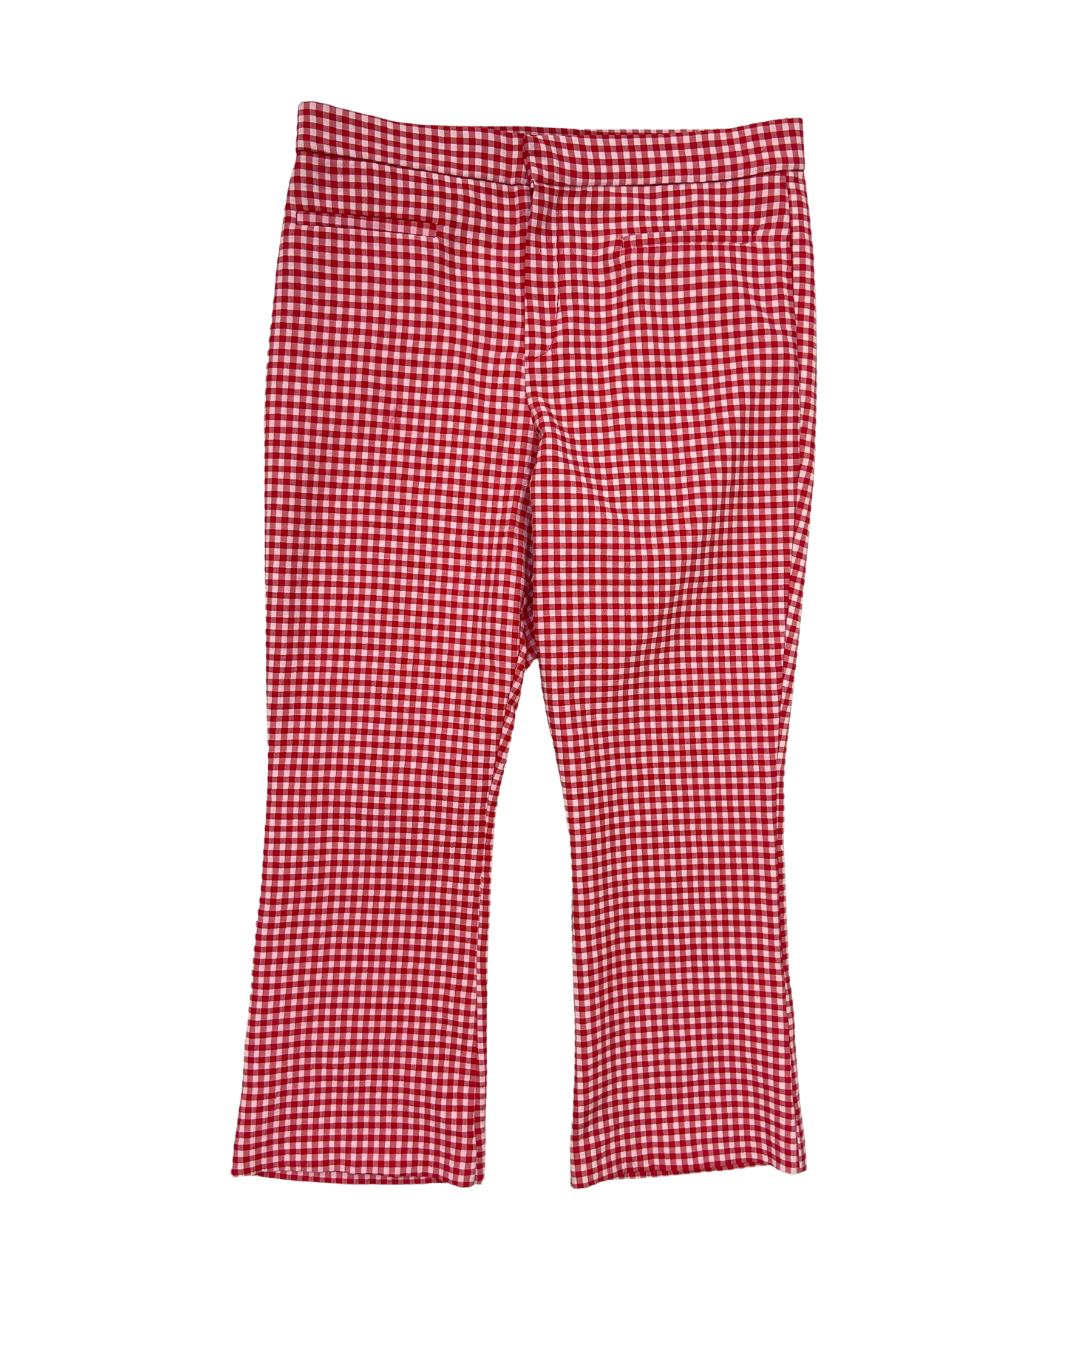 Zara Red Gingham Capri Trousers